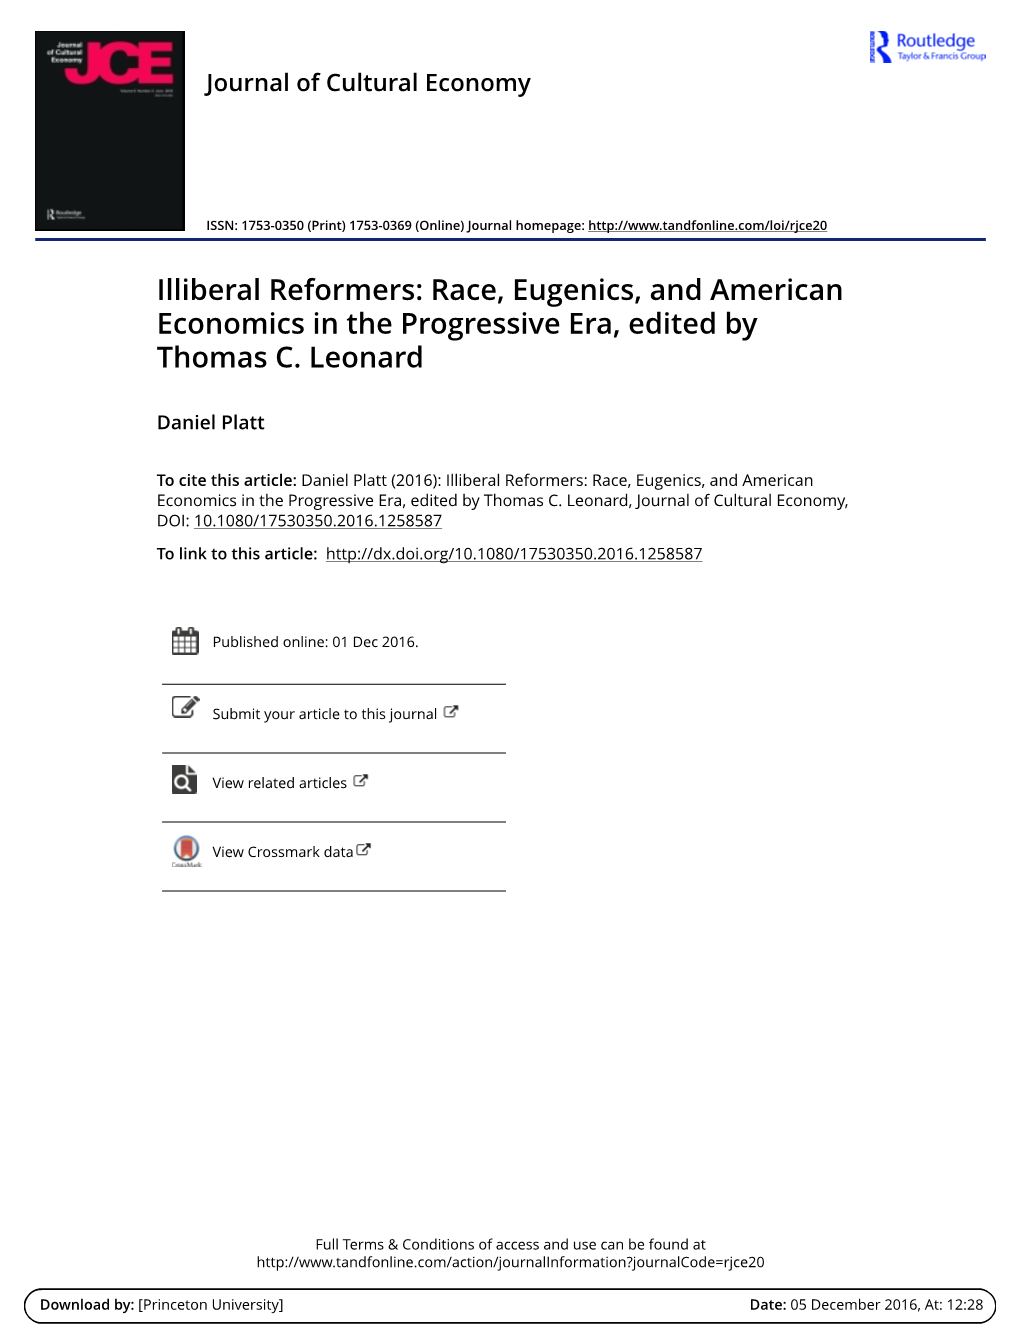 Illiberal Reformers: Race, Eugenics, and American Economics in the Progressive Era, Edited by Thomas C